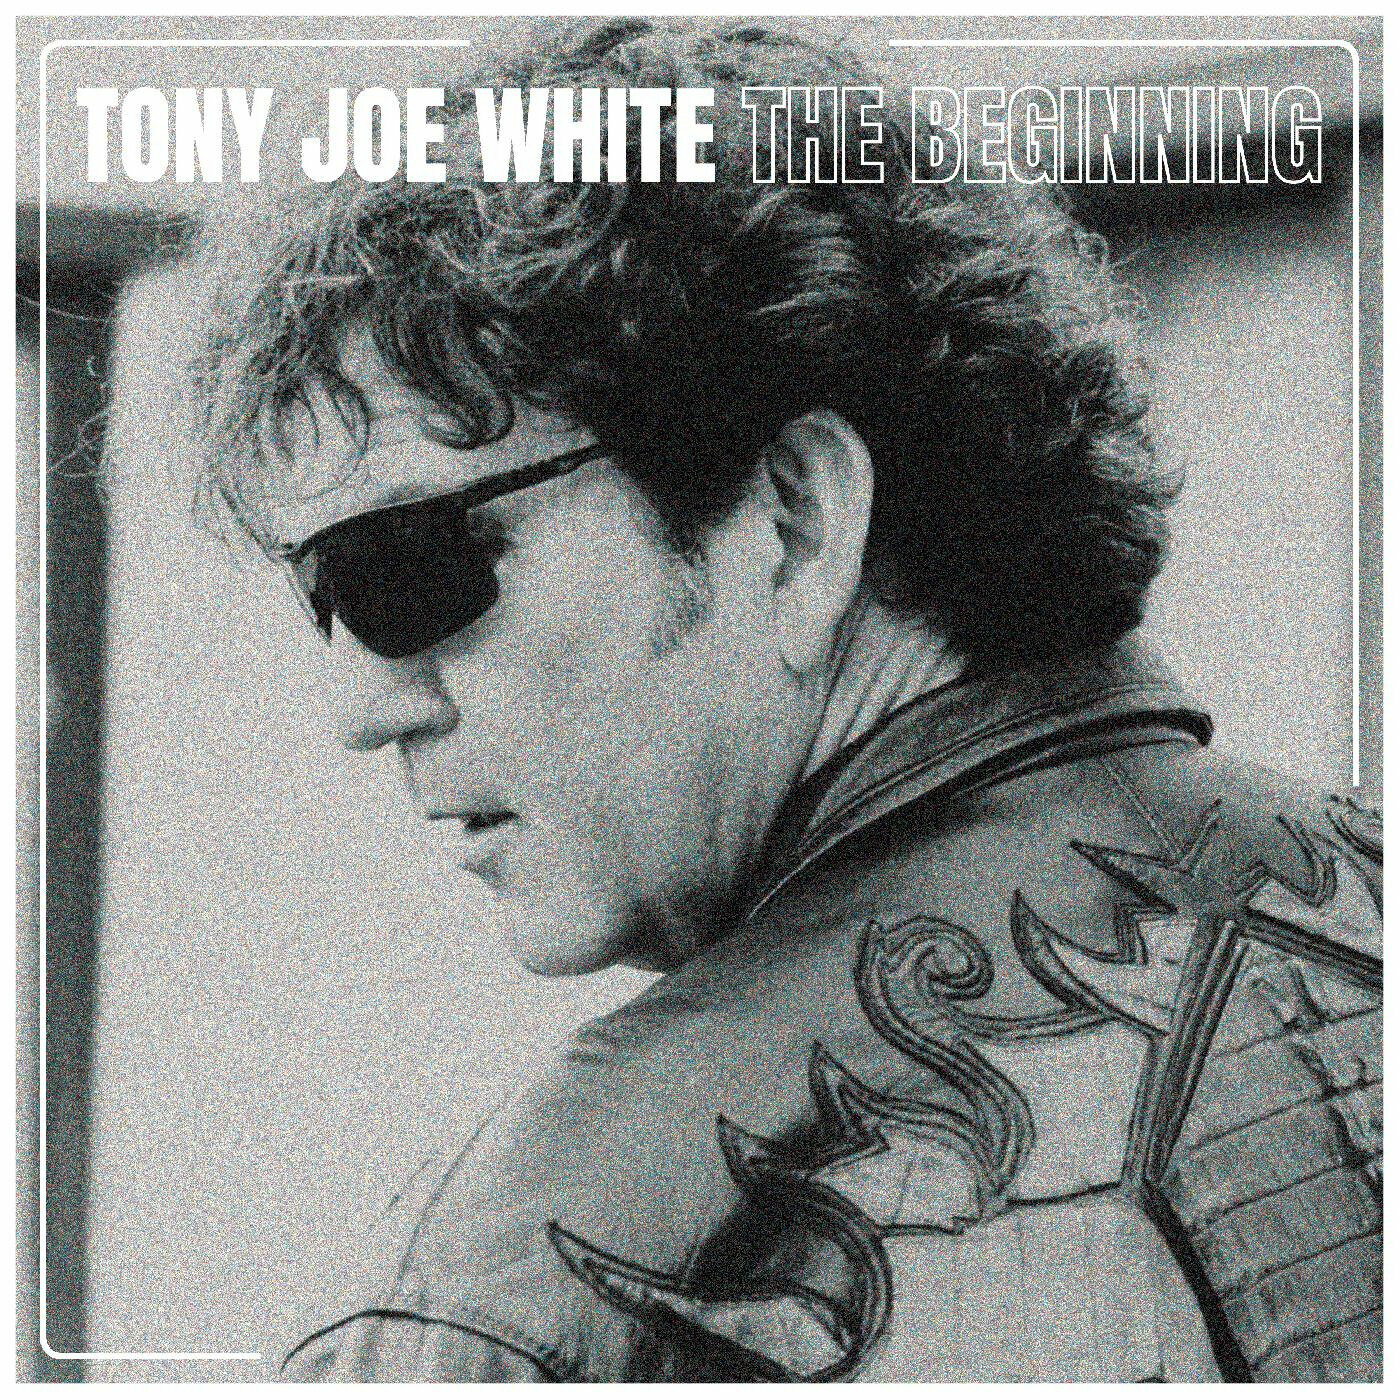 Vinylplade Tony Joe White - The Beginning (LP)